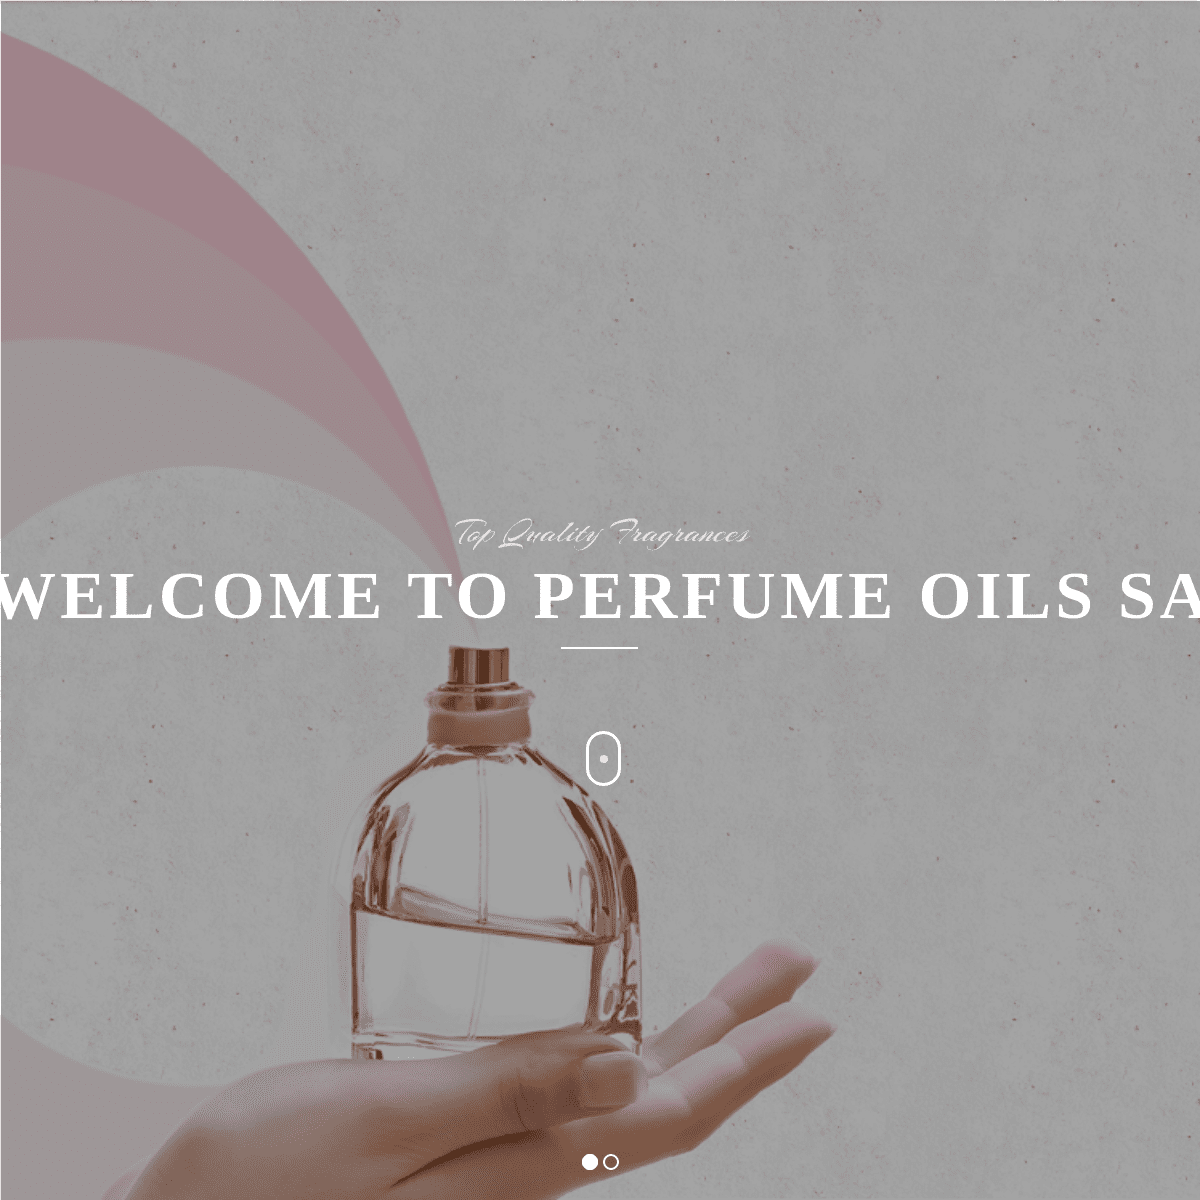 Perfume Oils | Importers and Distributors of Quality Perfume Oils